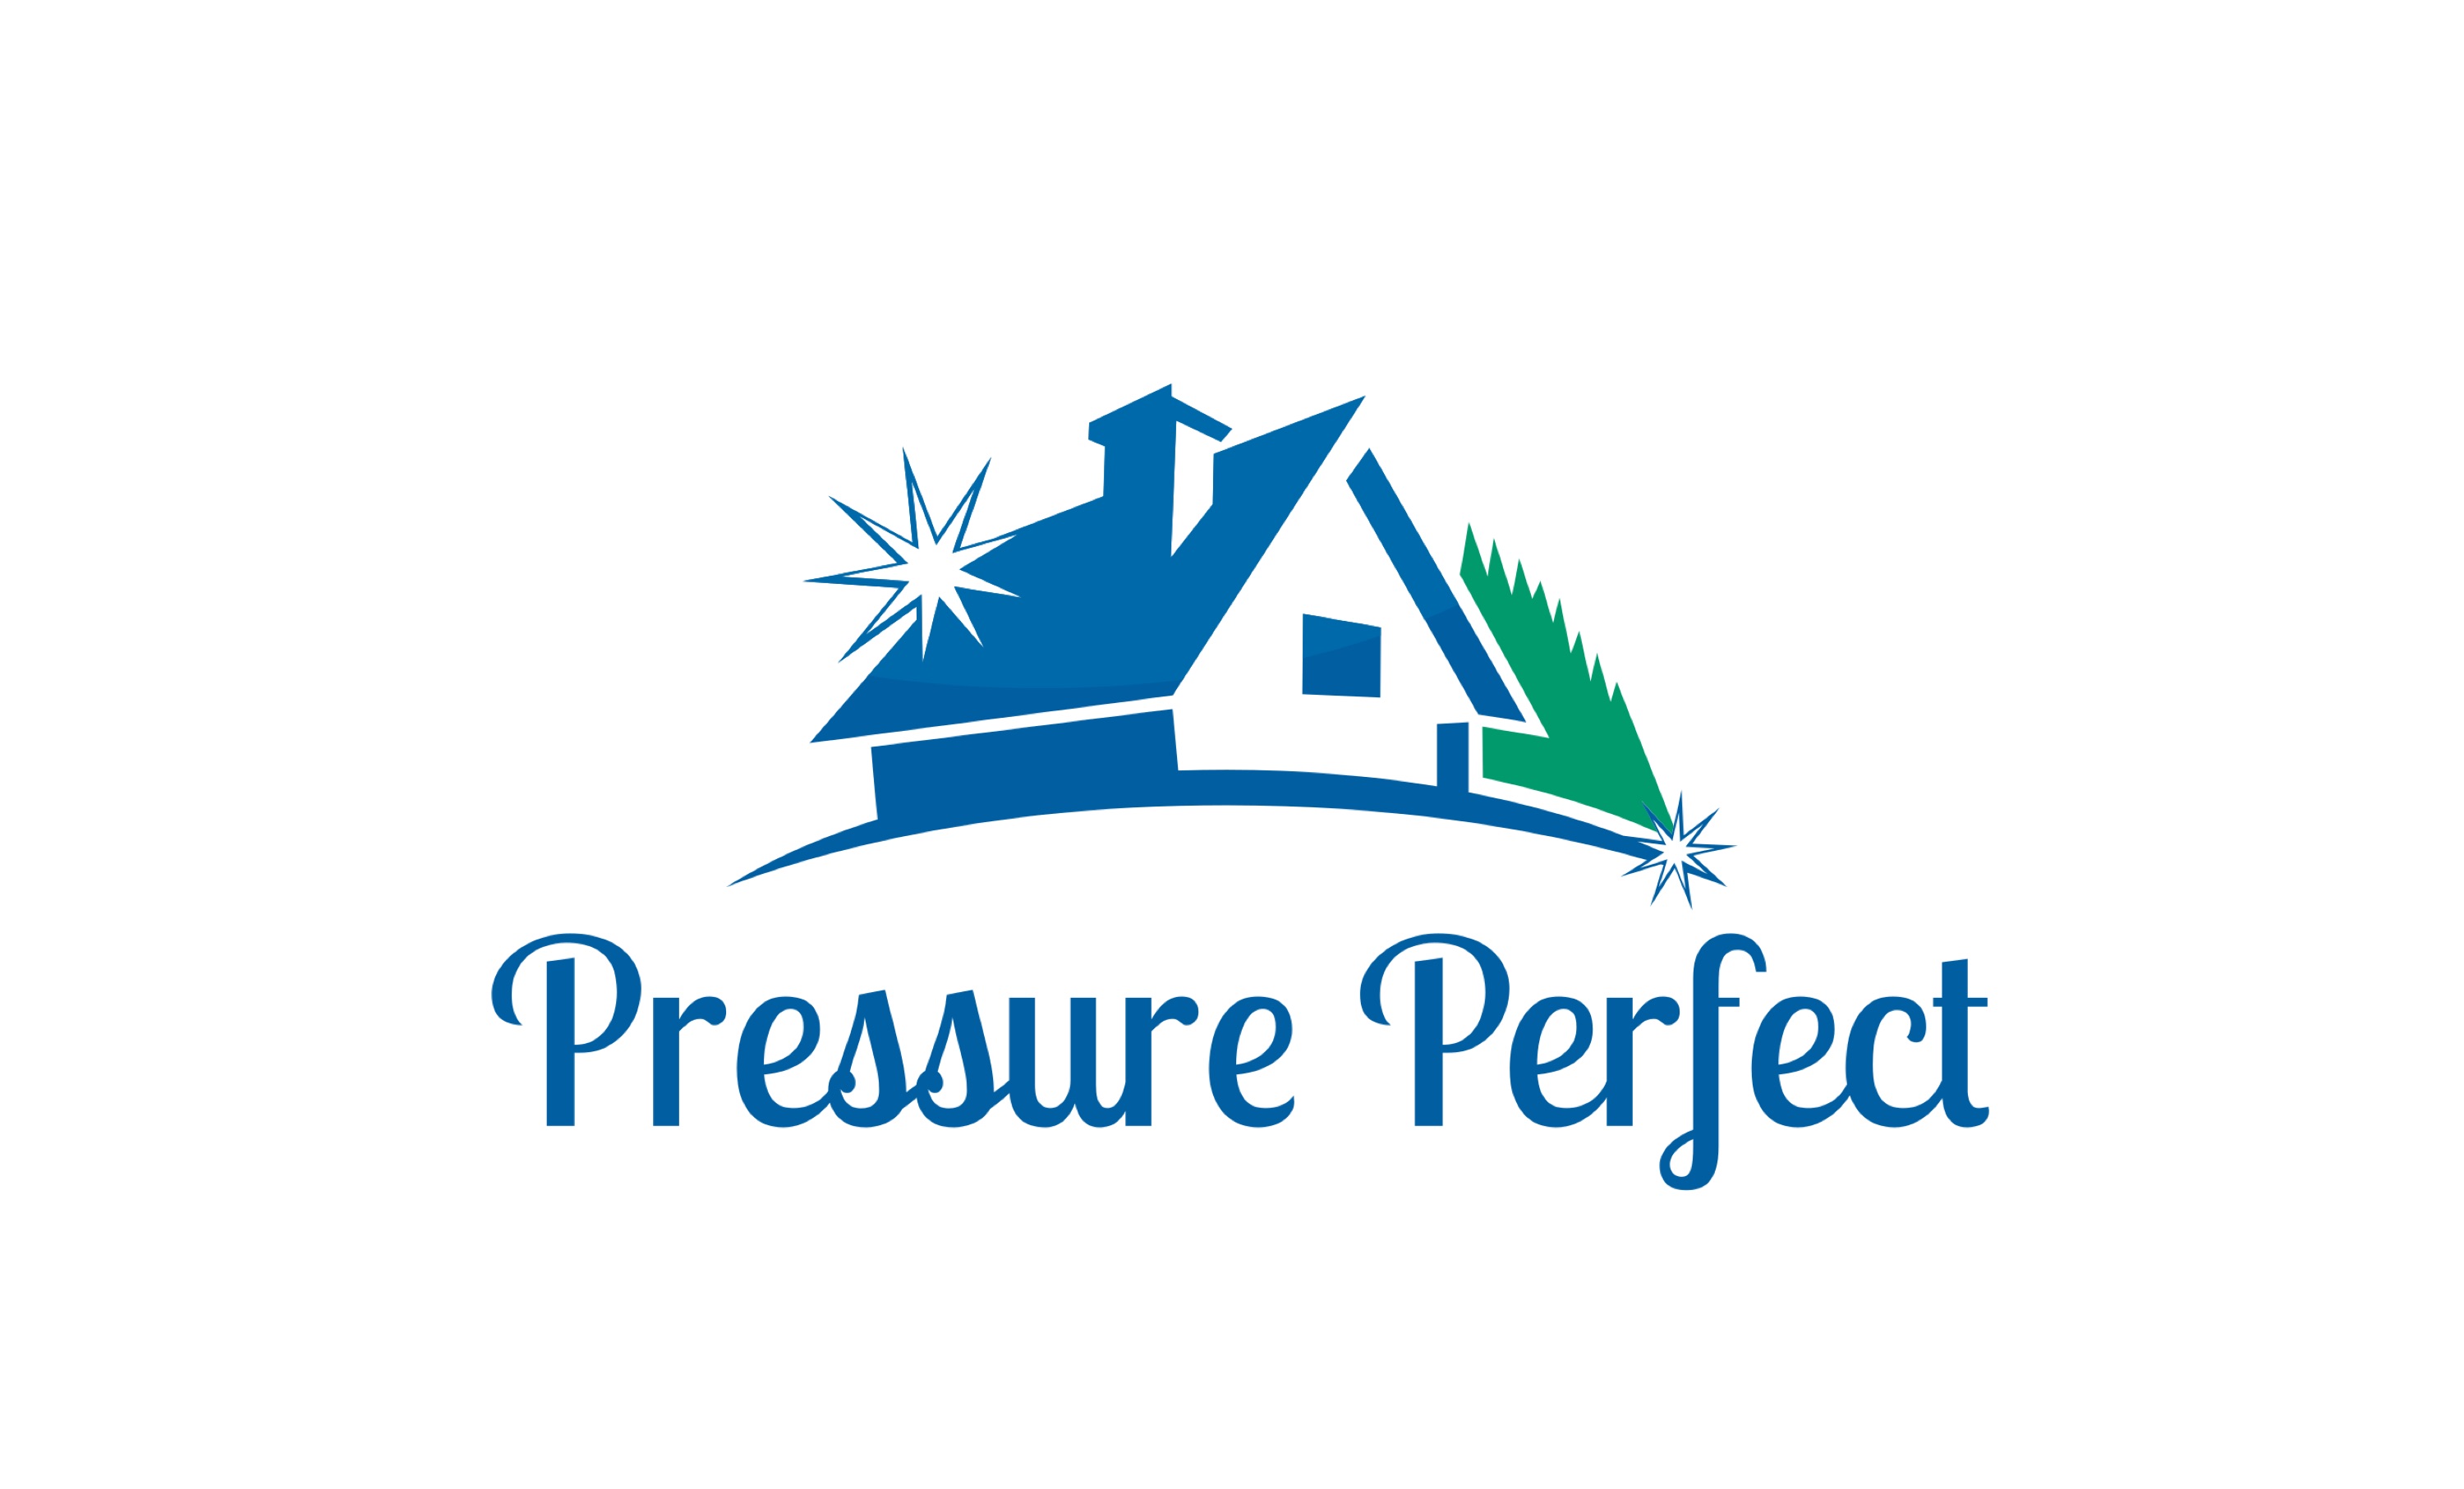 Pressure Perfect Logo